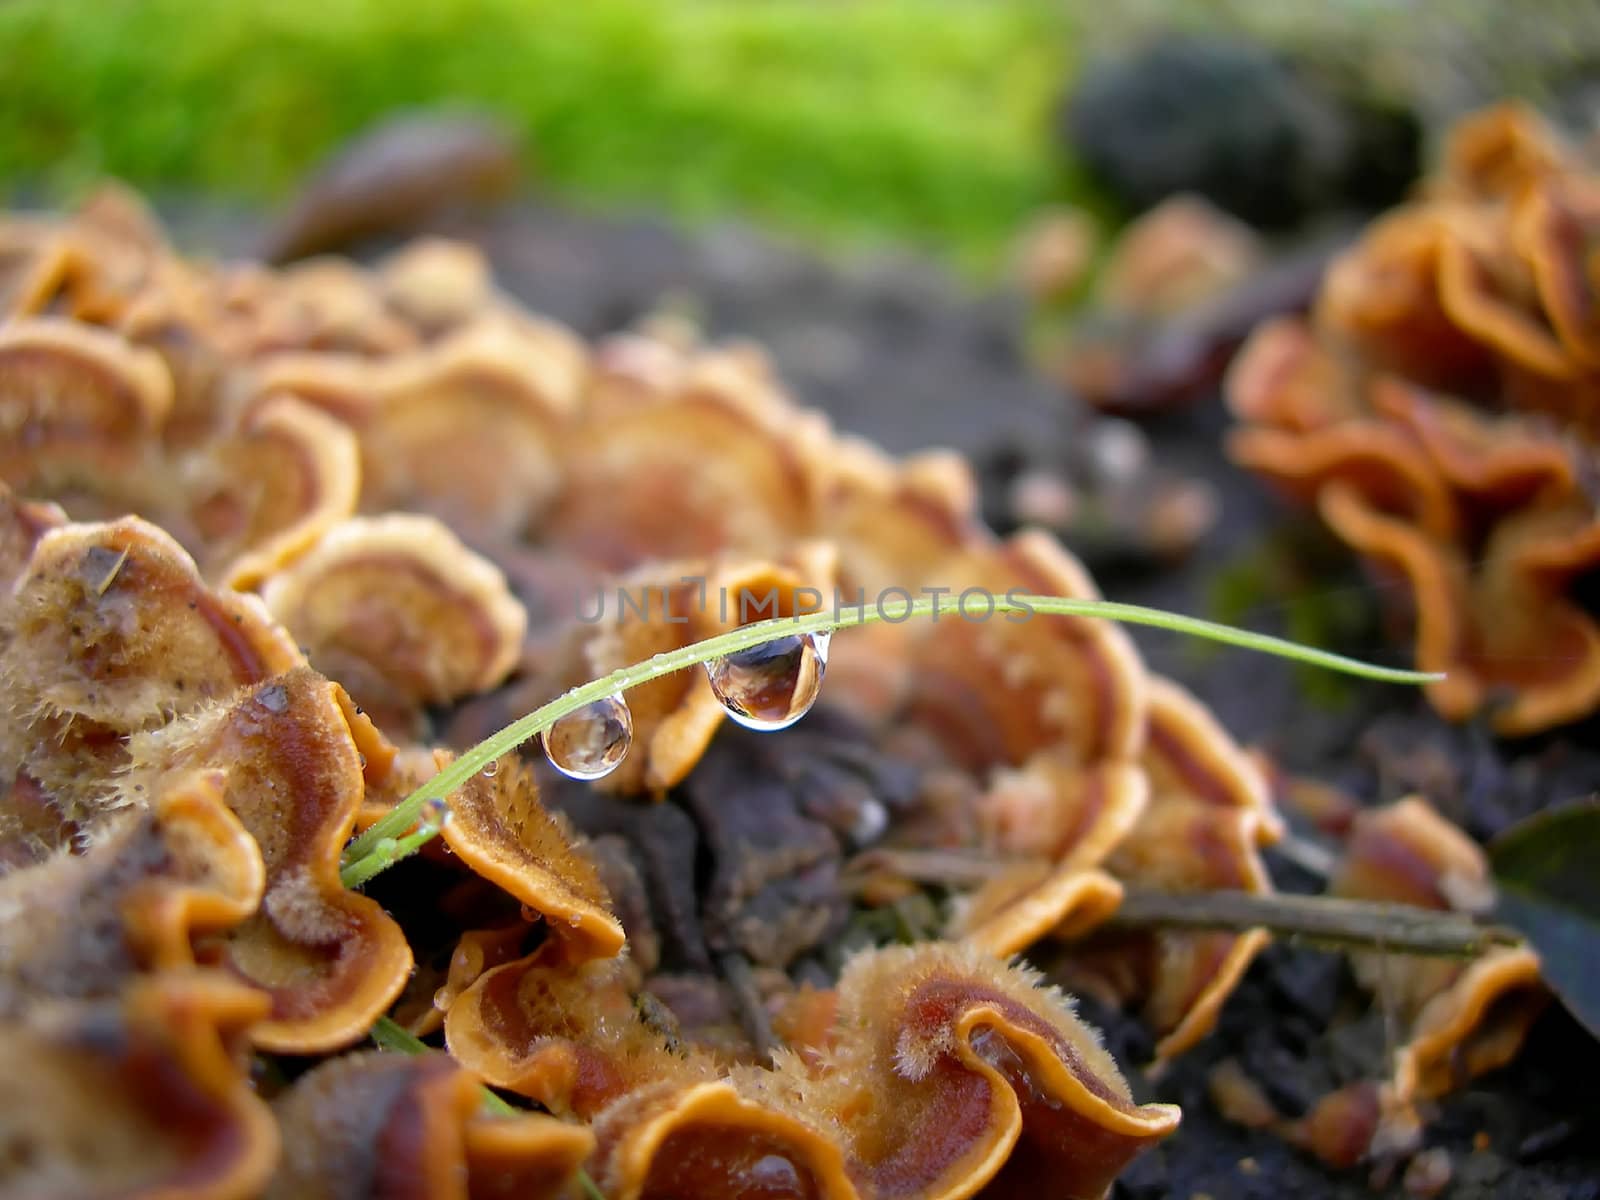           Drop of dew on the grass stalk near the mushroom - shallow DOF